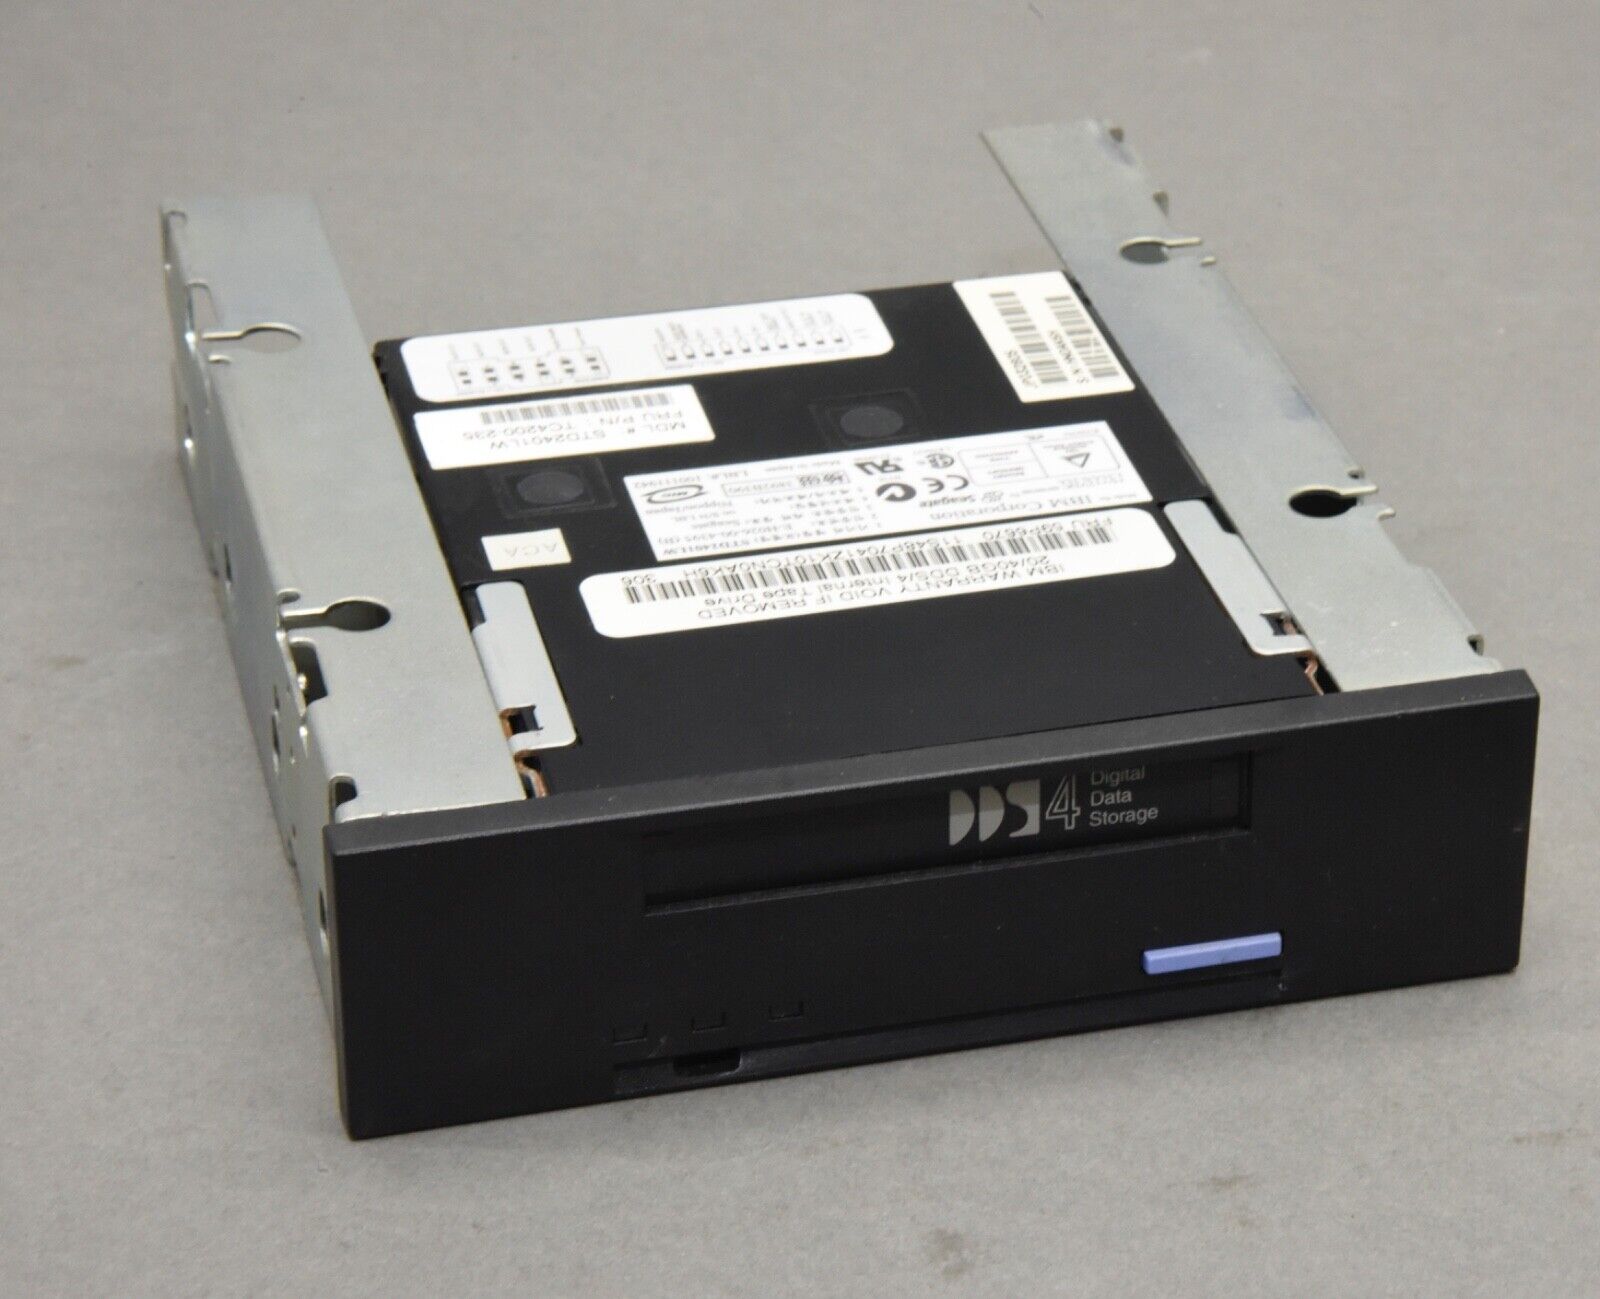 Used IBM Seagate STD2401LW 20/40GB DDS/4 LCD SCSI DAT Internal Tape Drive